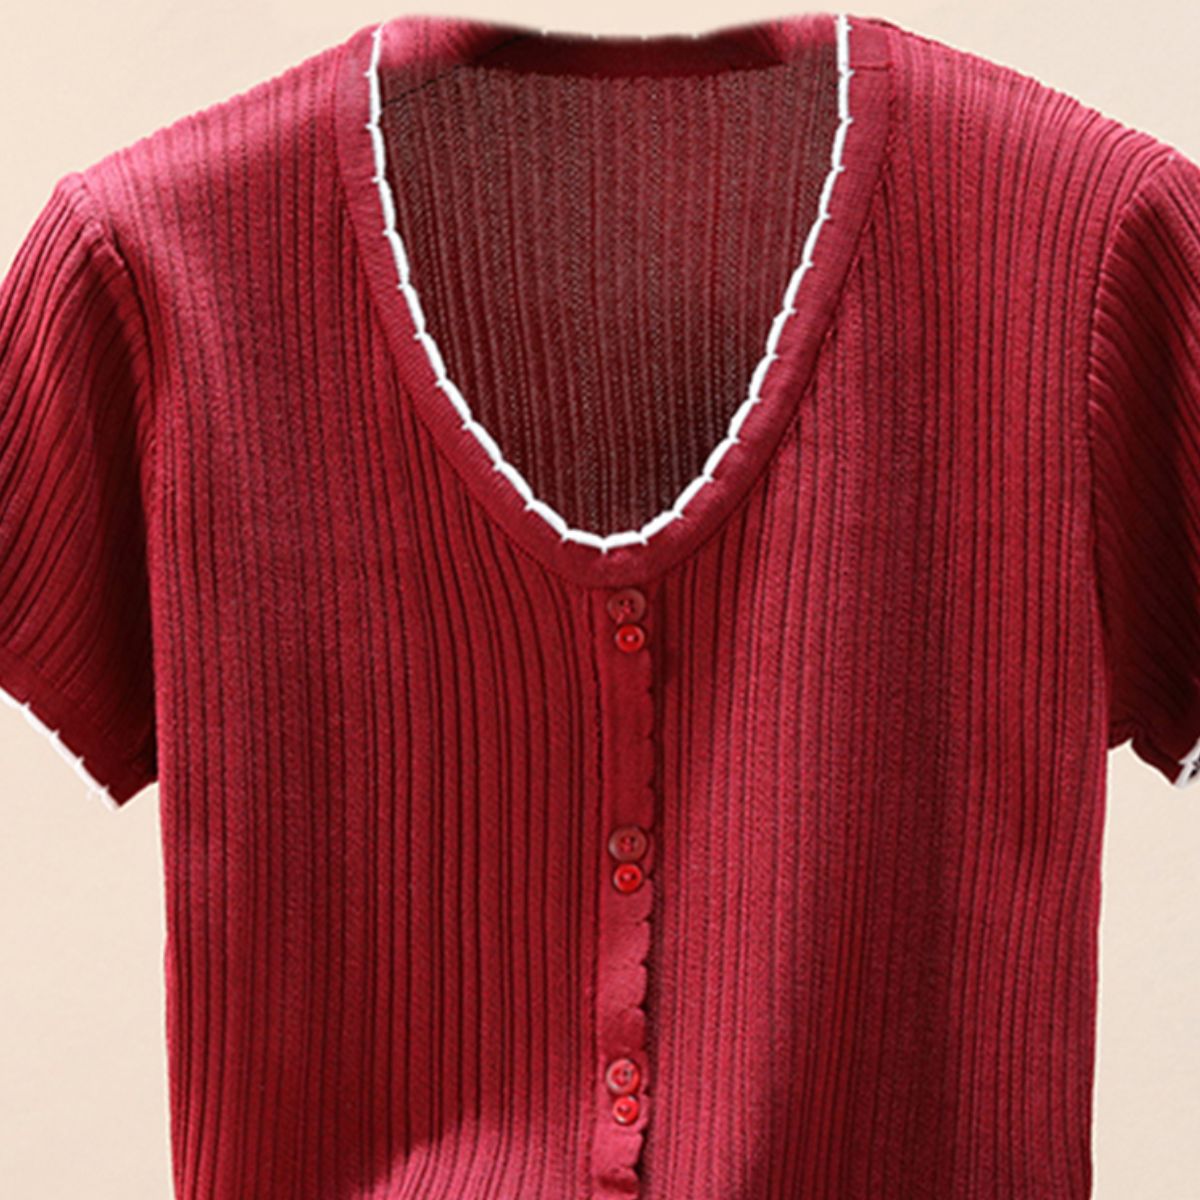 Women's Contrast Decorative Button Short Sleeve Knit Top